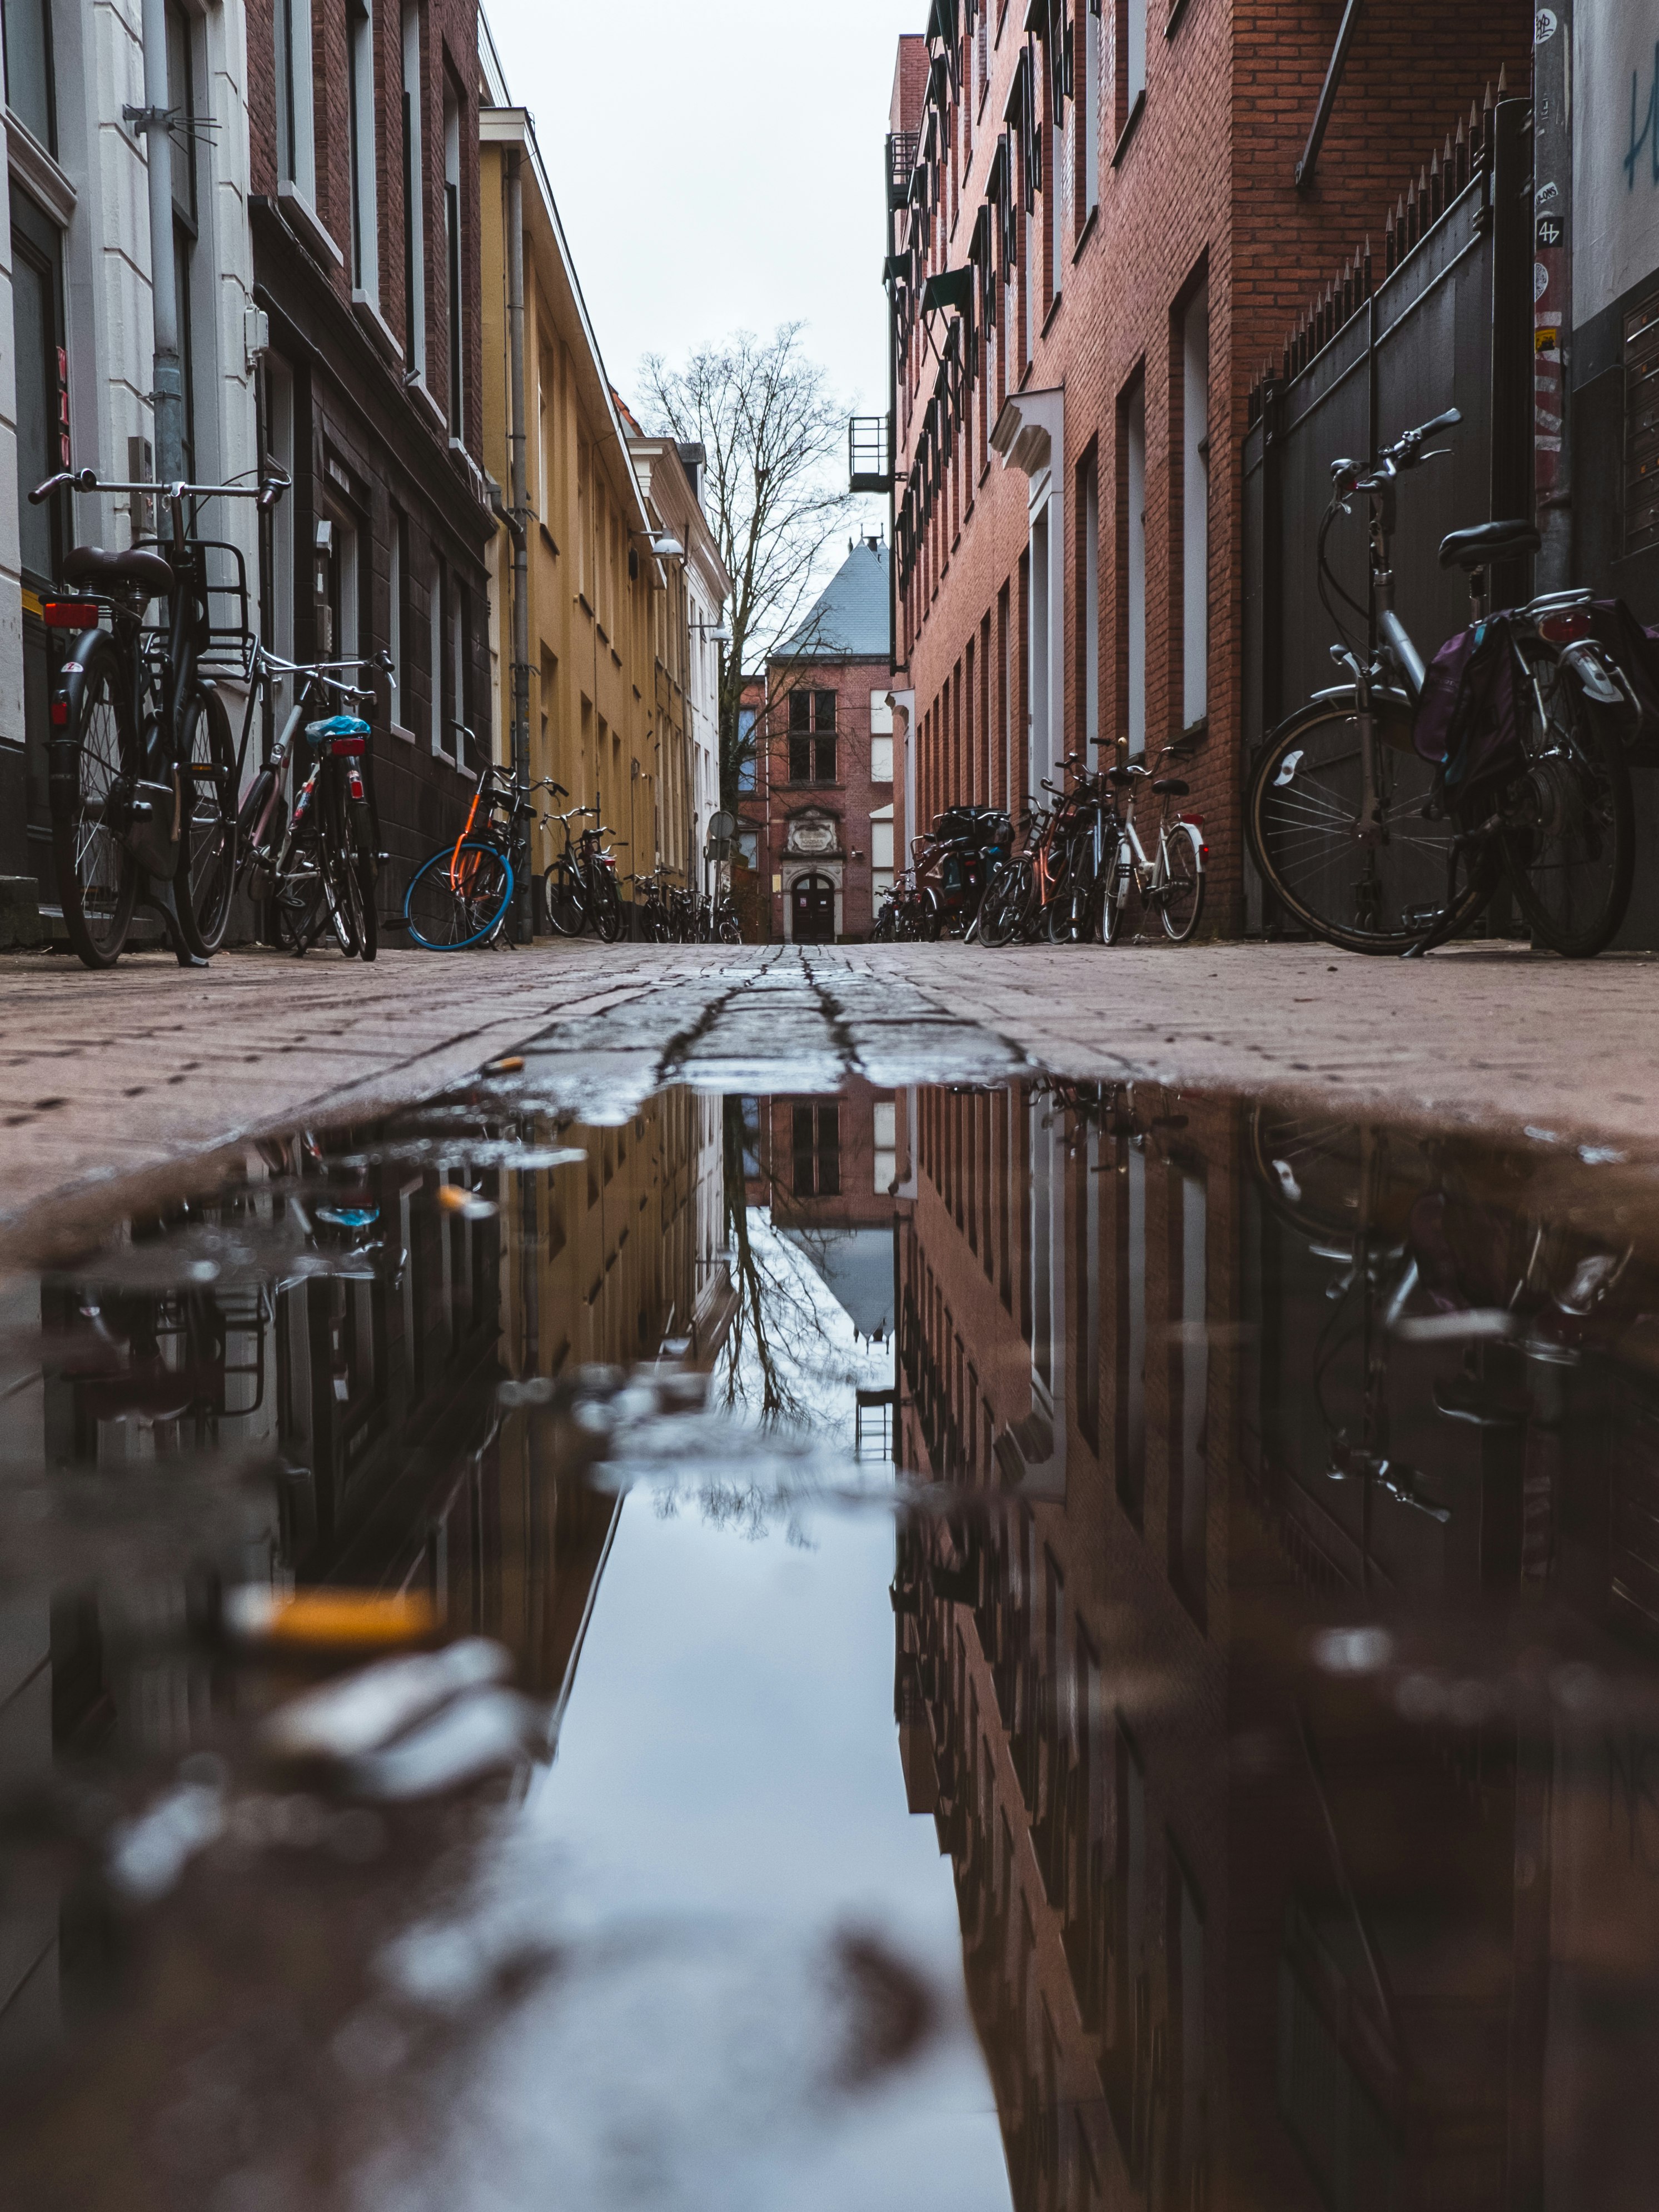 Dark alley in the city of Groningen, the Netherlands.